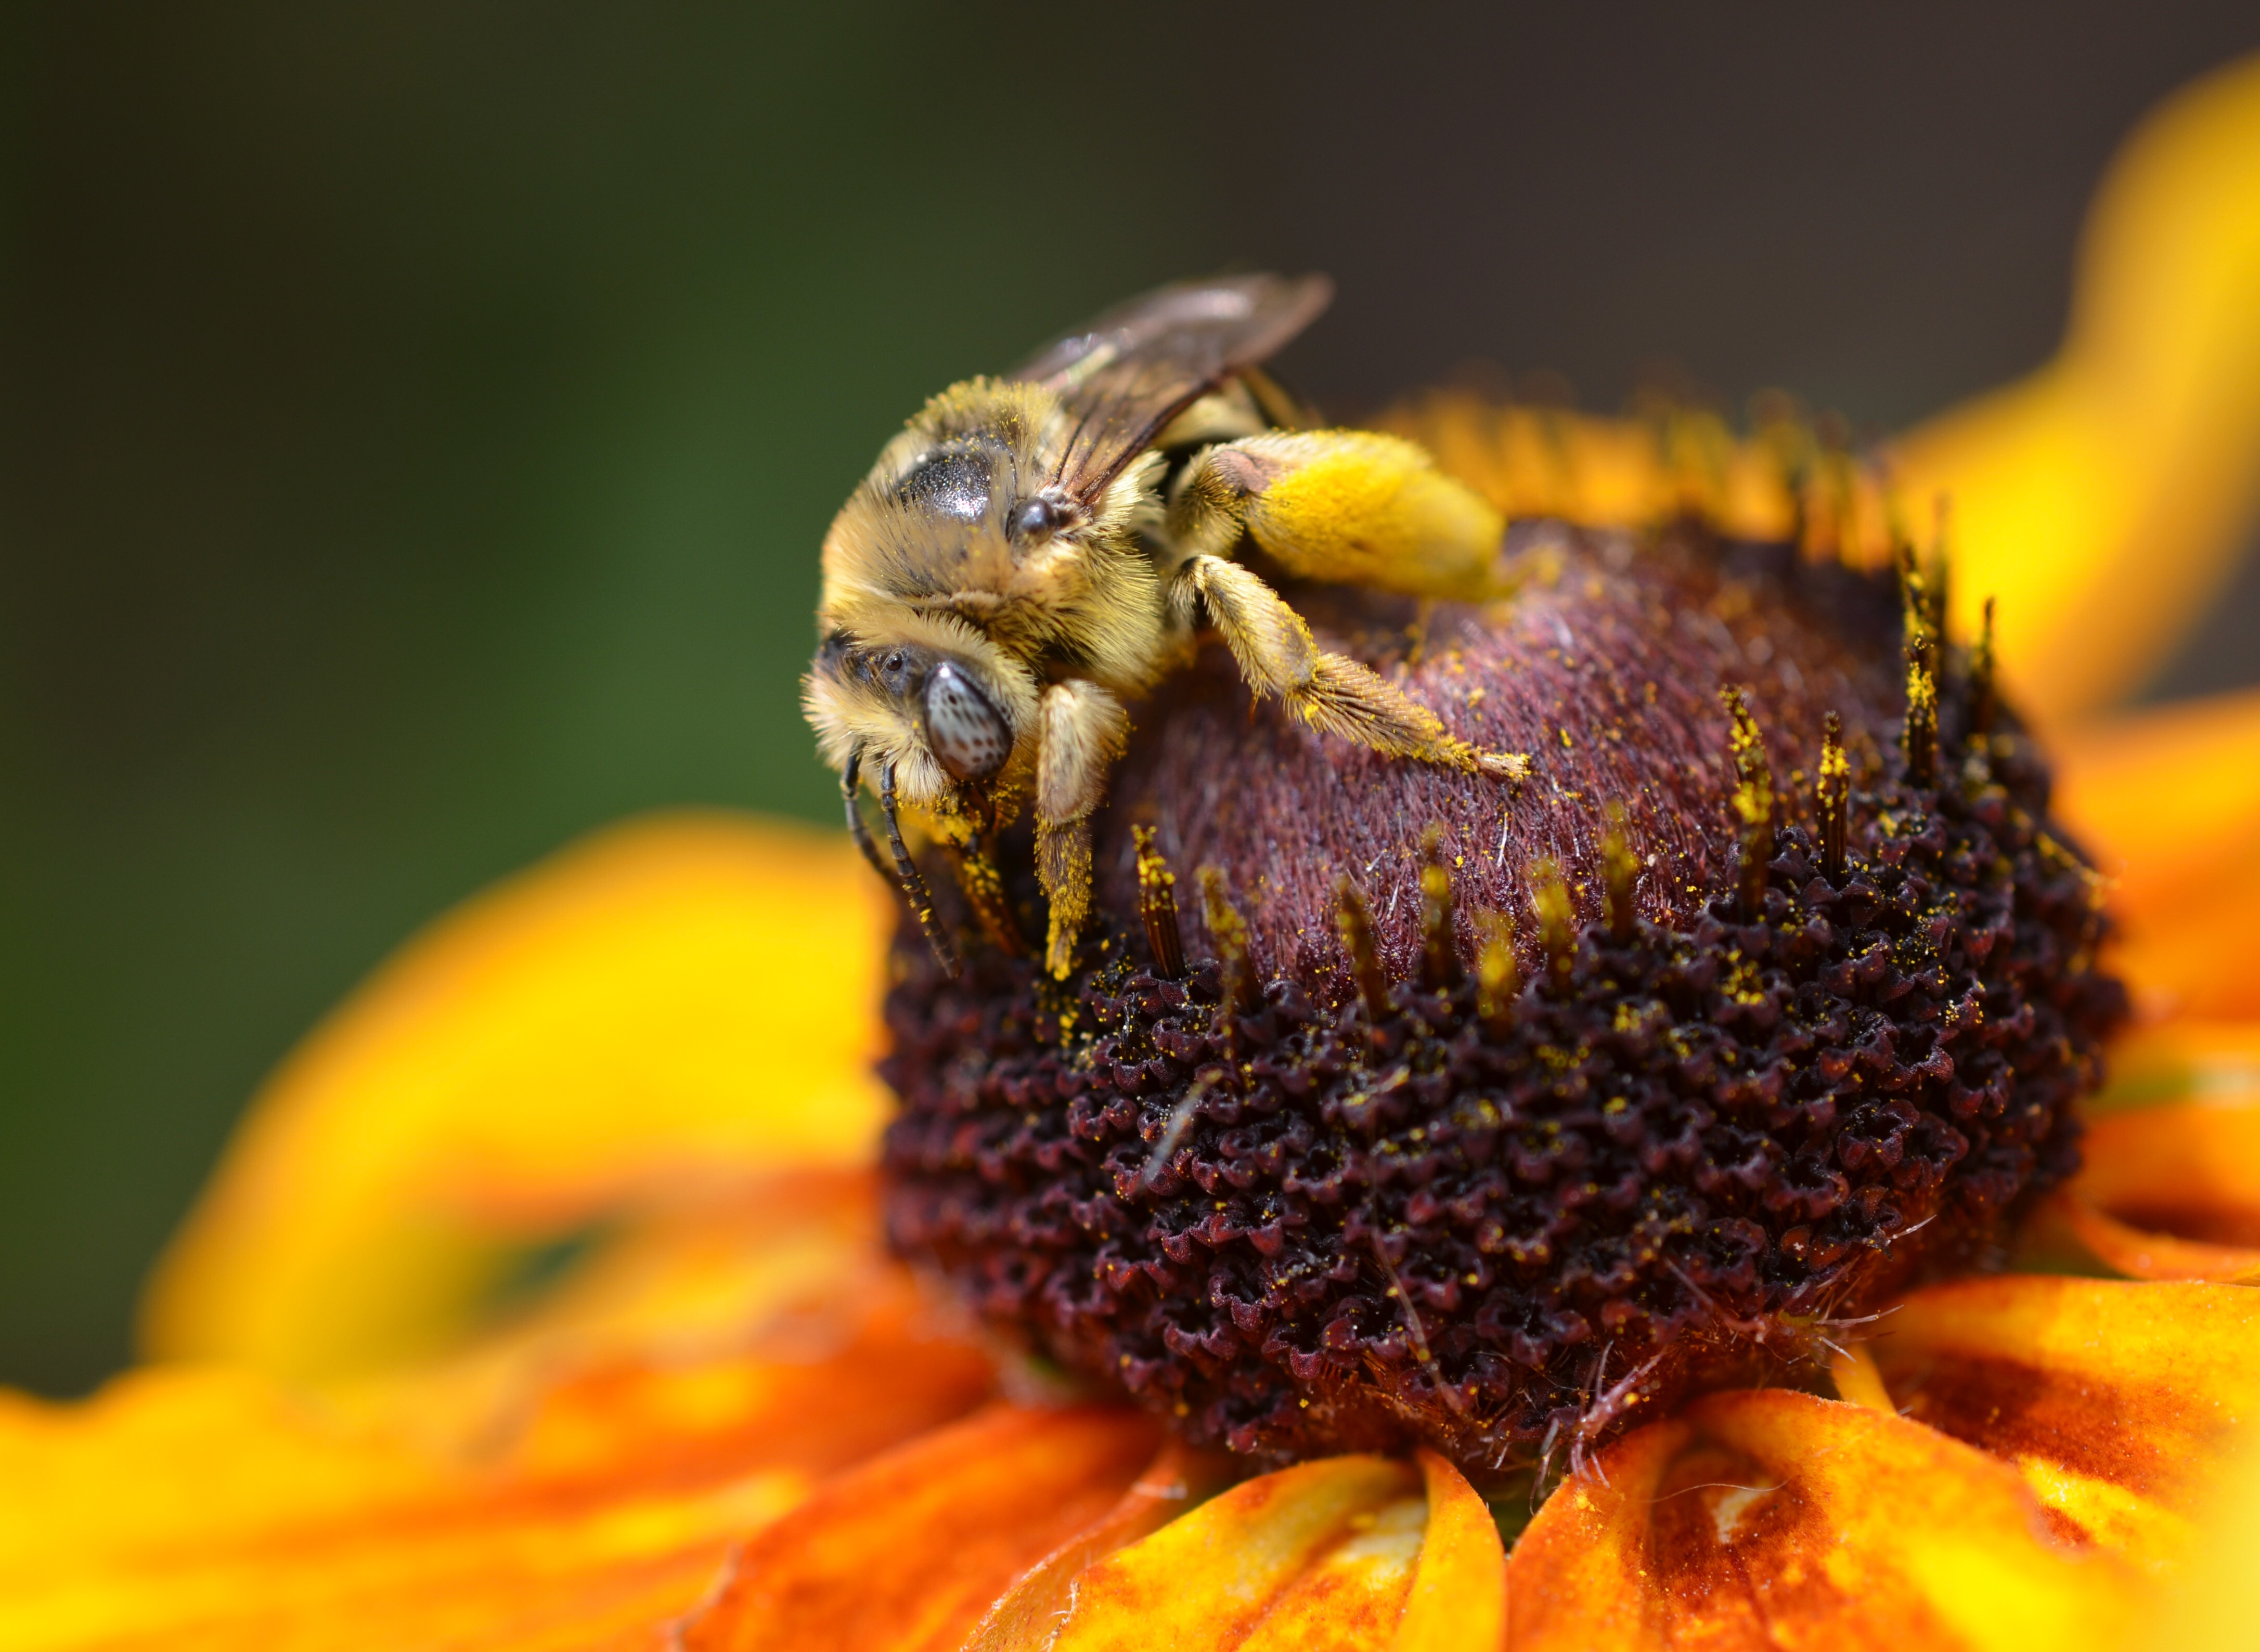 Bee on flower photo by Renee Cook